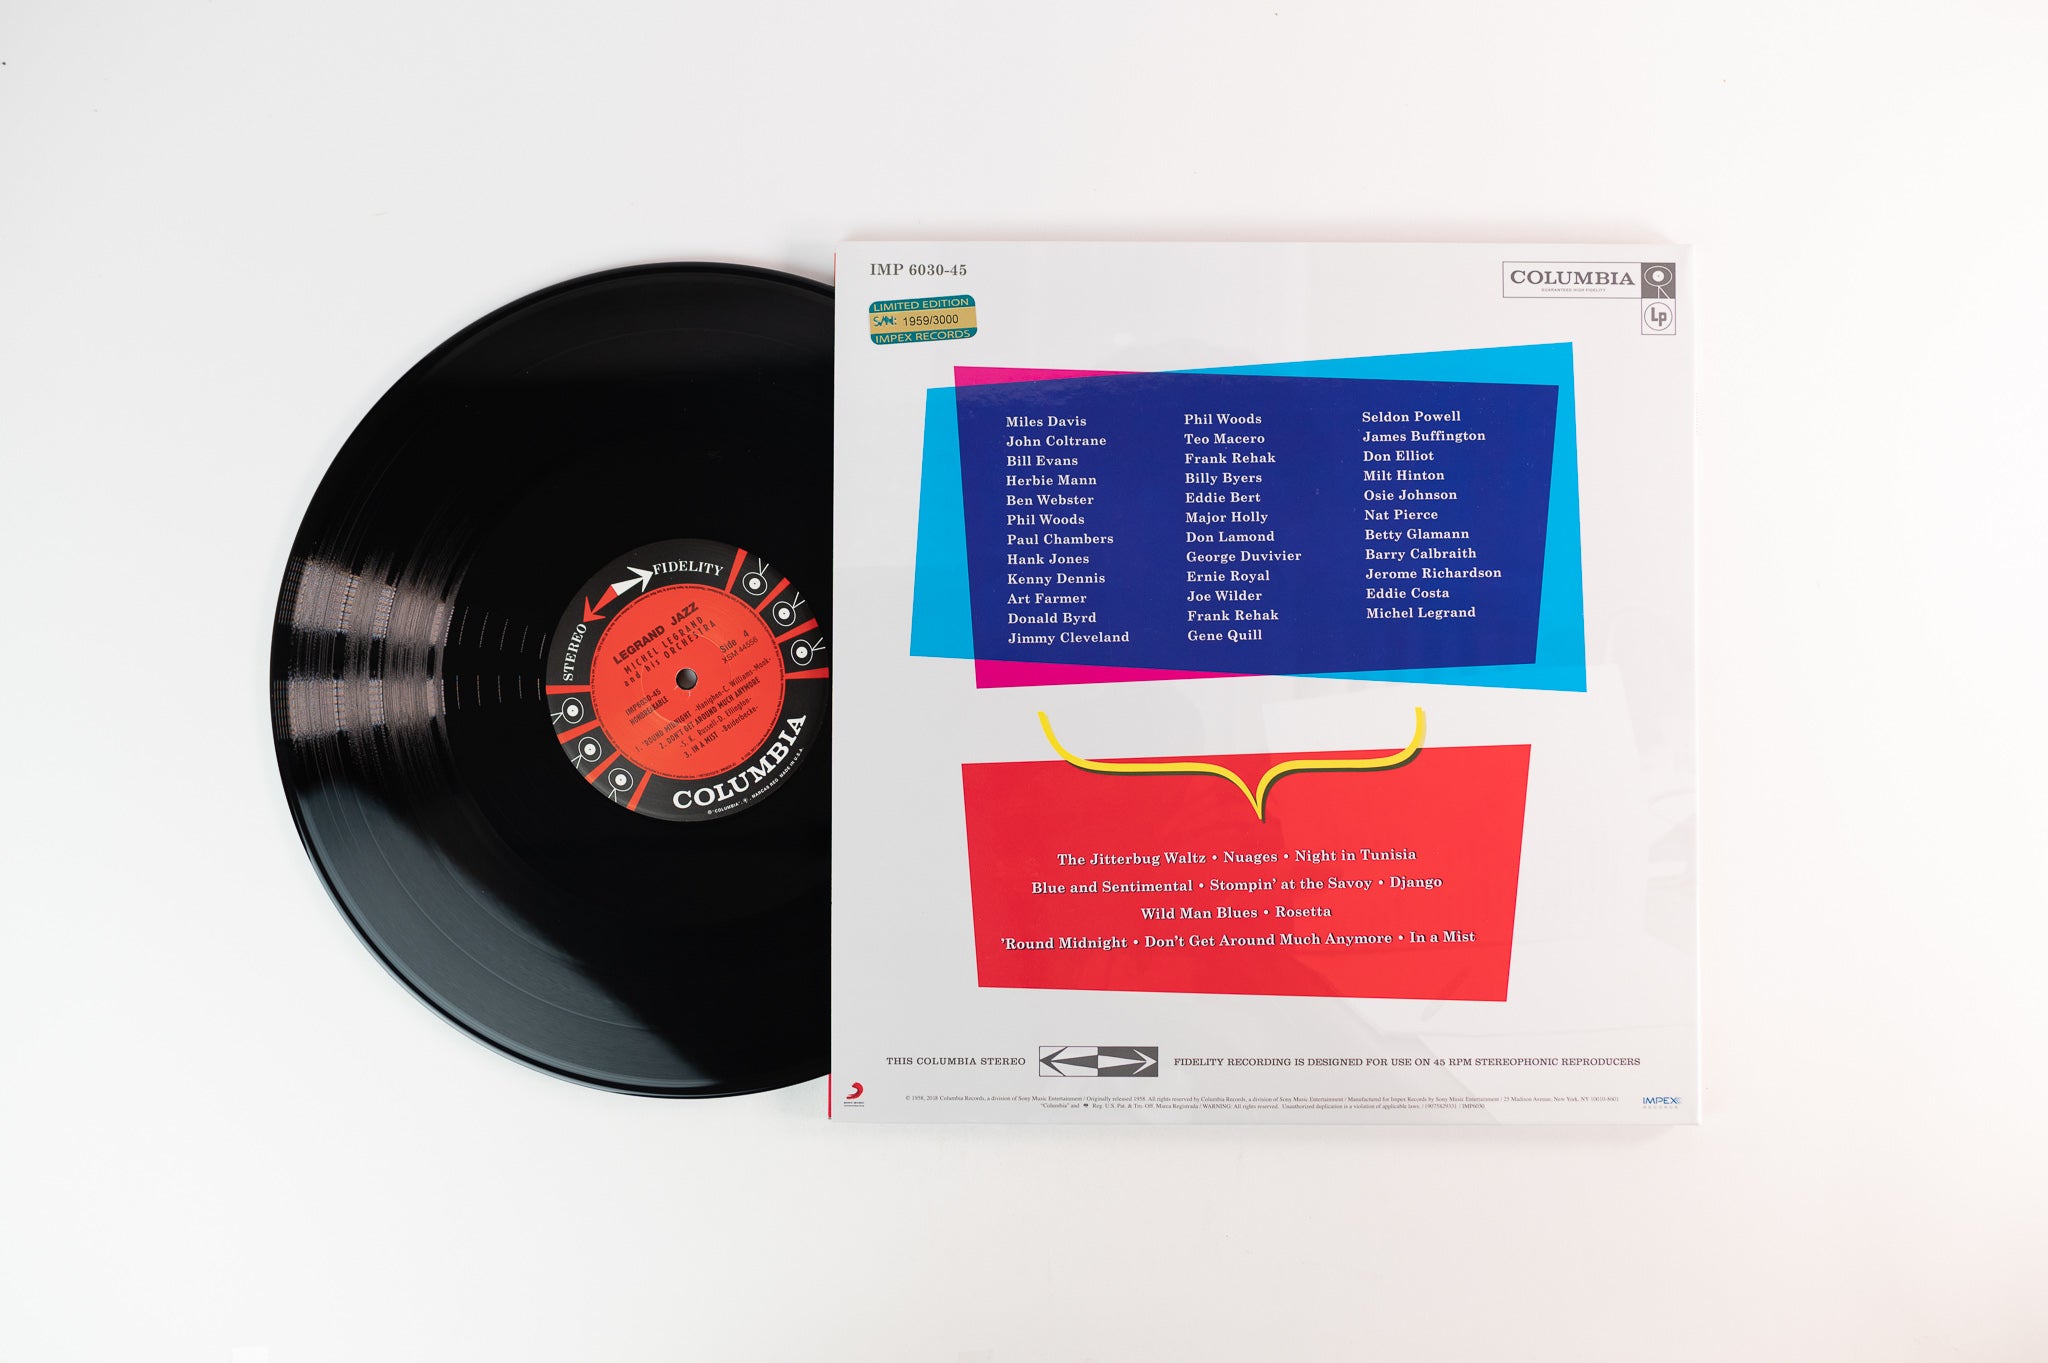 Michel Legrand - Legrand Jazz on Impex Numbered Reissue 45 RPM